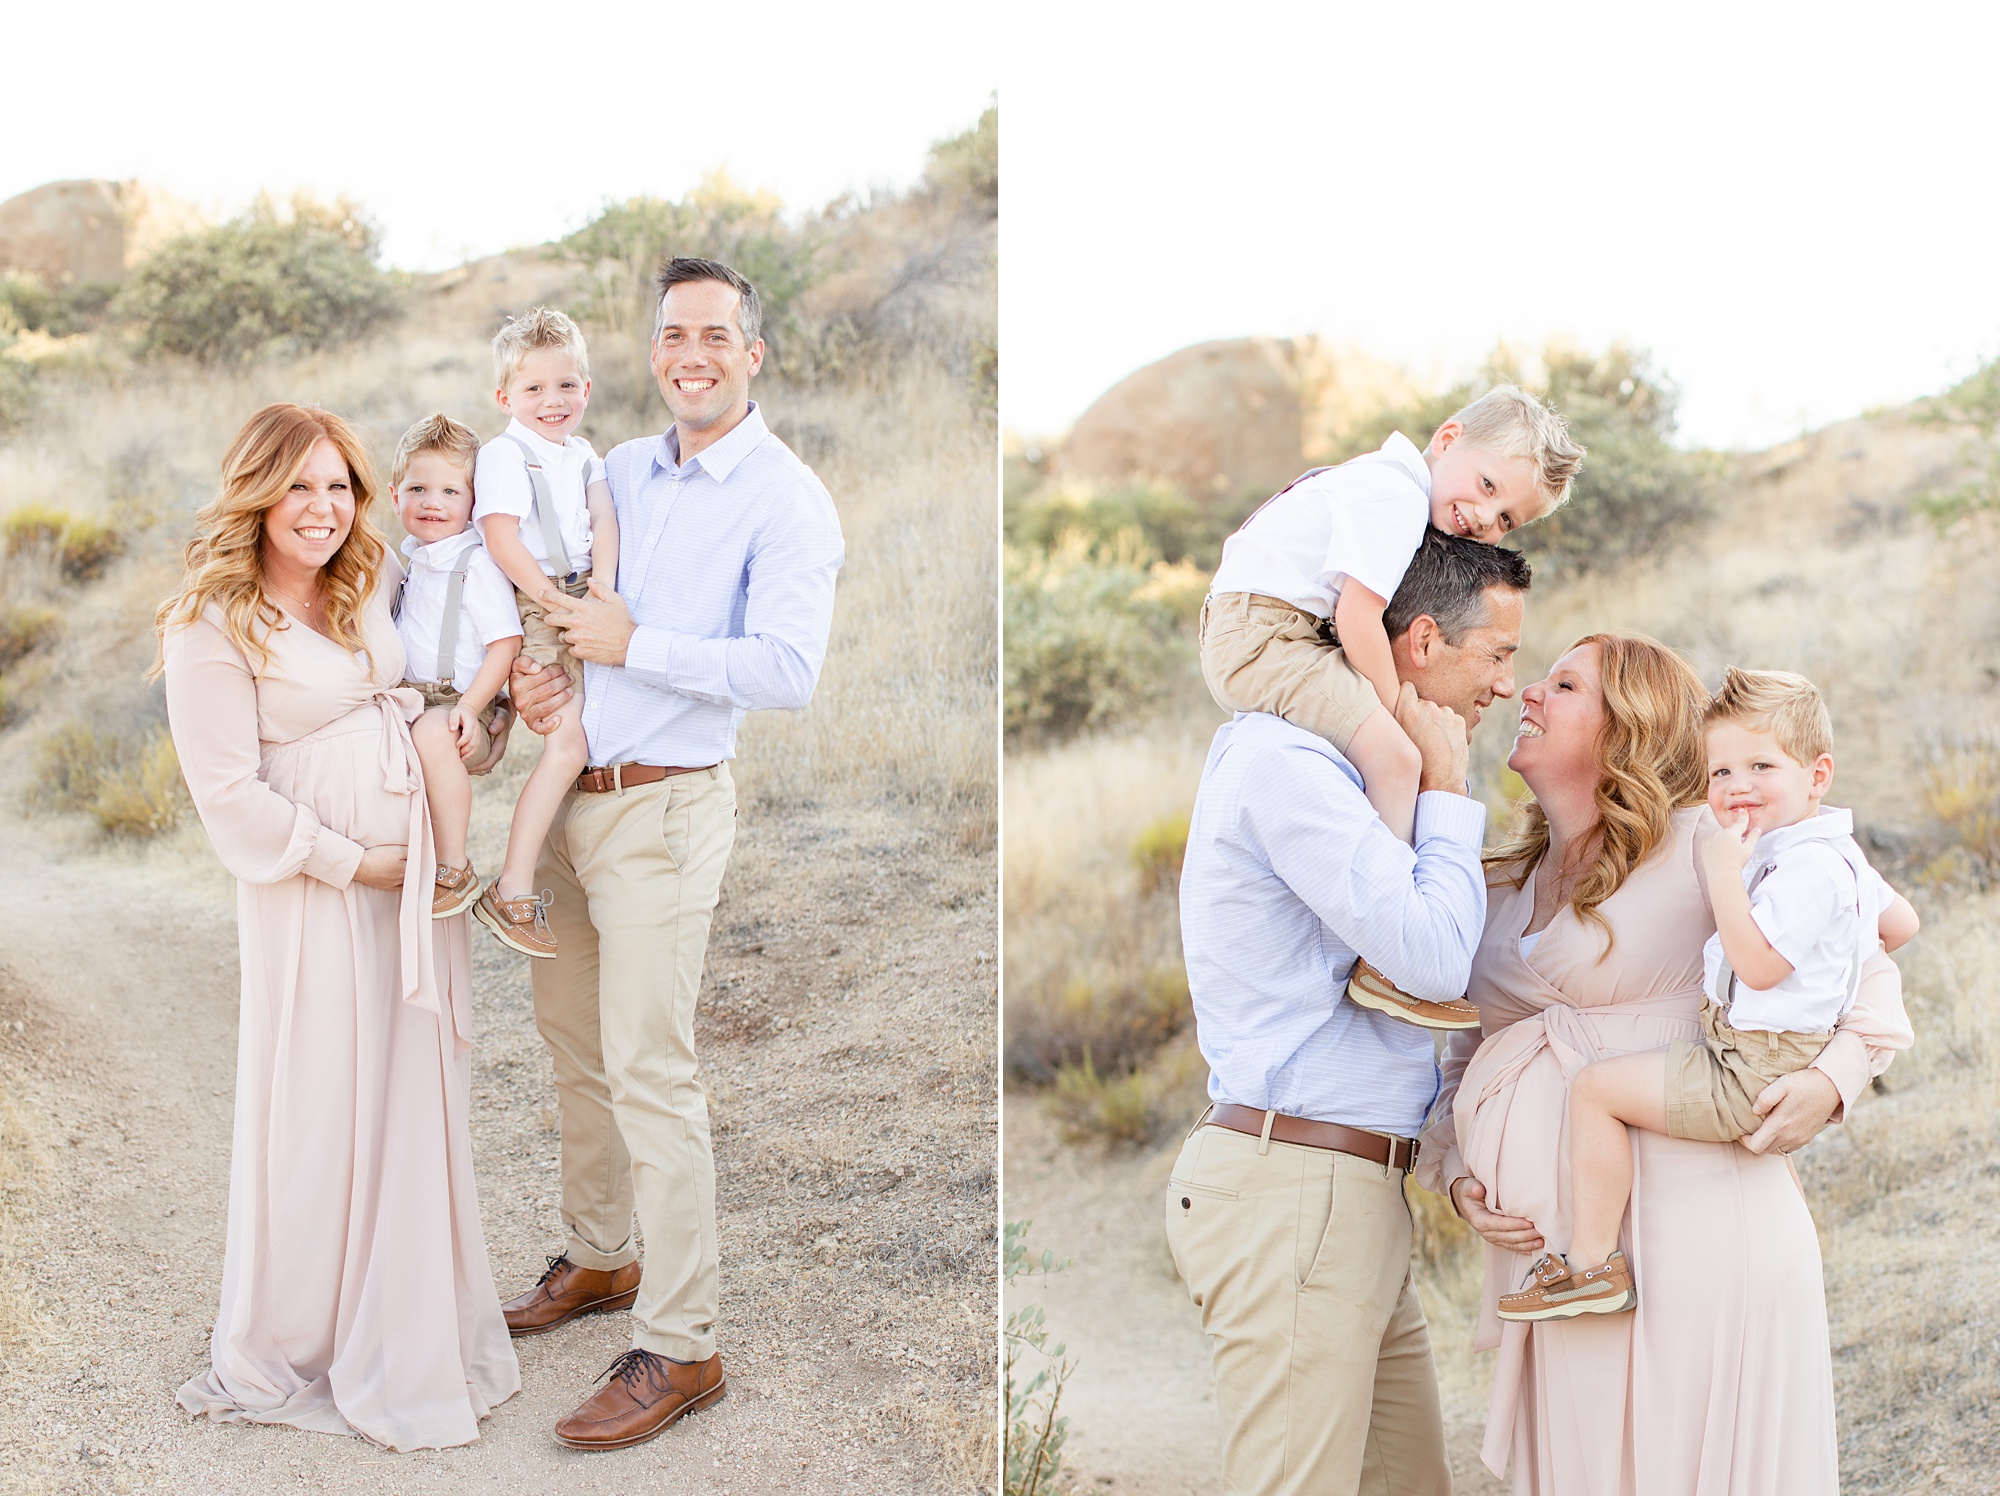 Scottsdale AZ maternity session in the desert with Amy & Jordan Photography